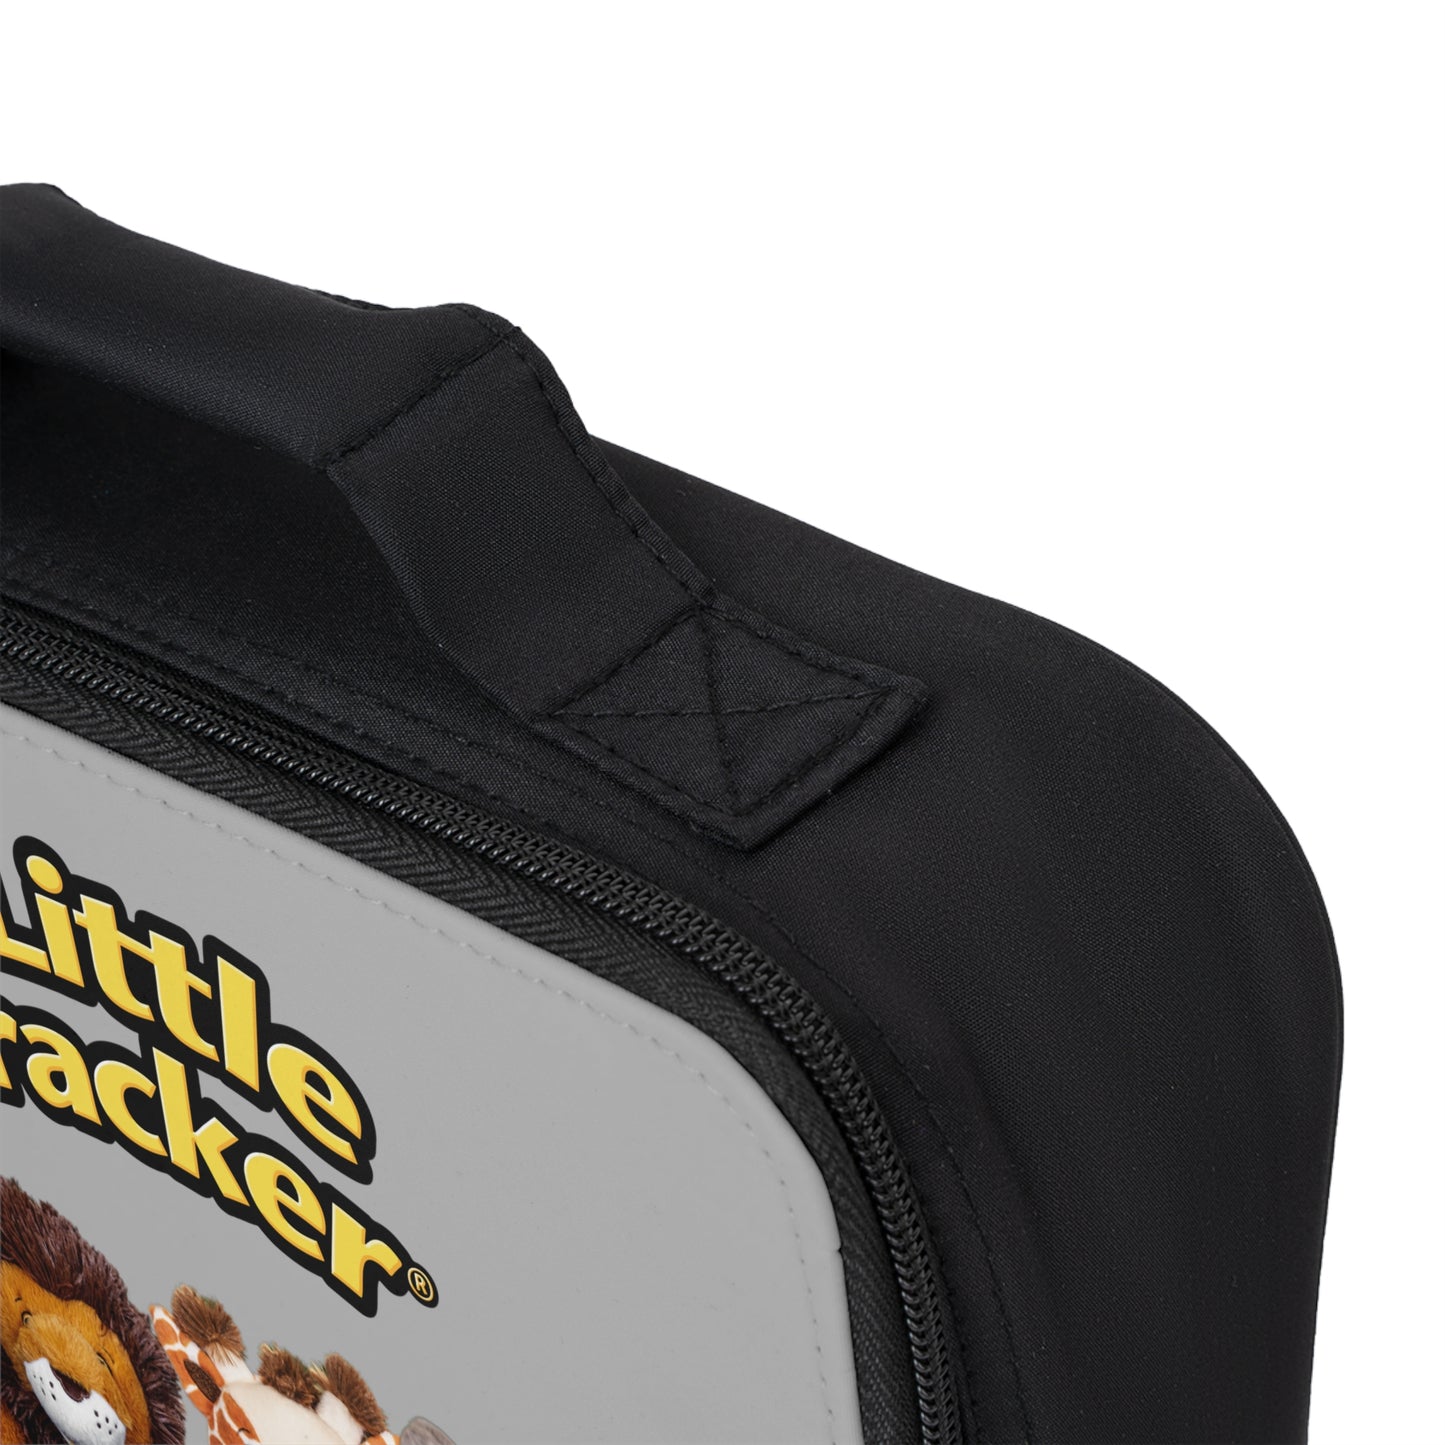 Little Tracker® Grey Lunch Bag/Safari Series